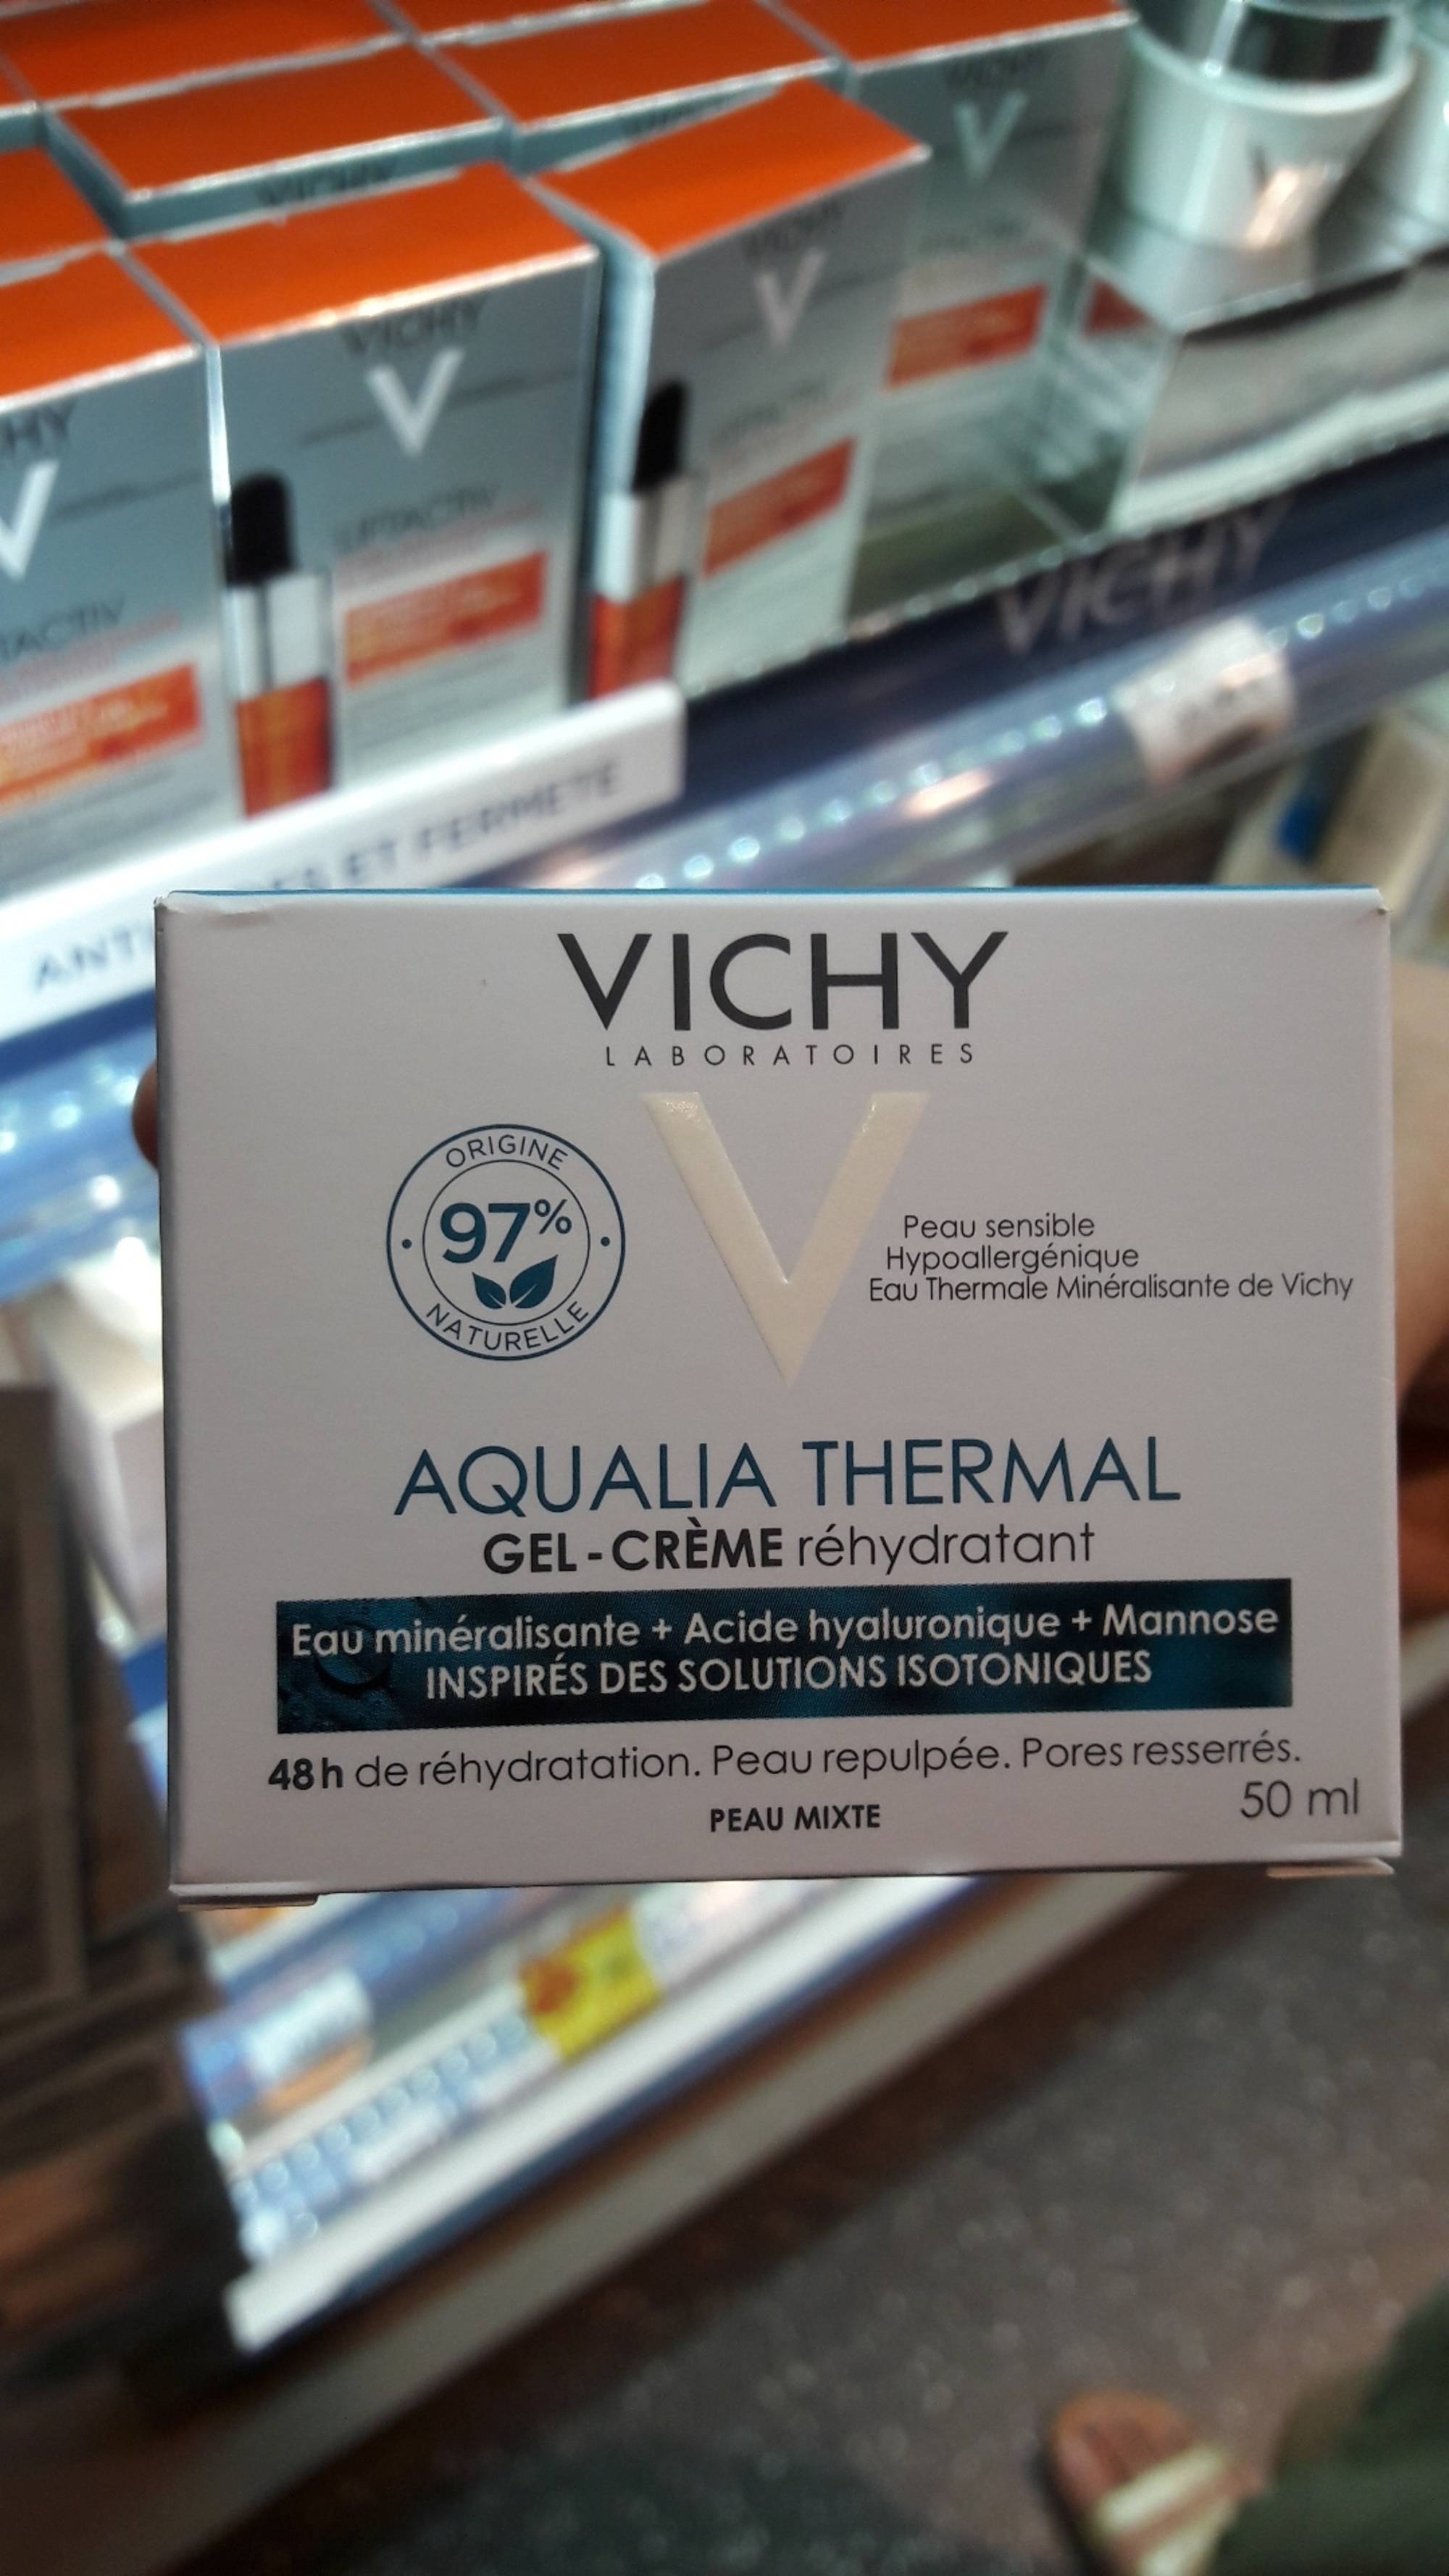 VICHY - Aqualia thermal - Gel crème réhydratant